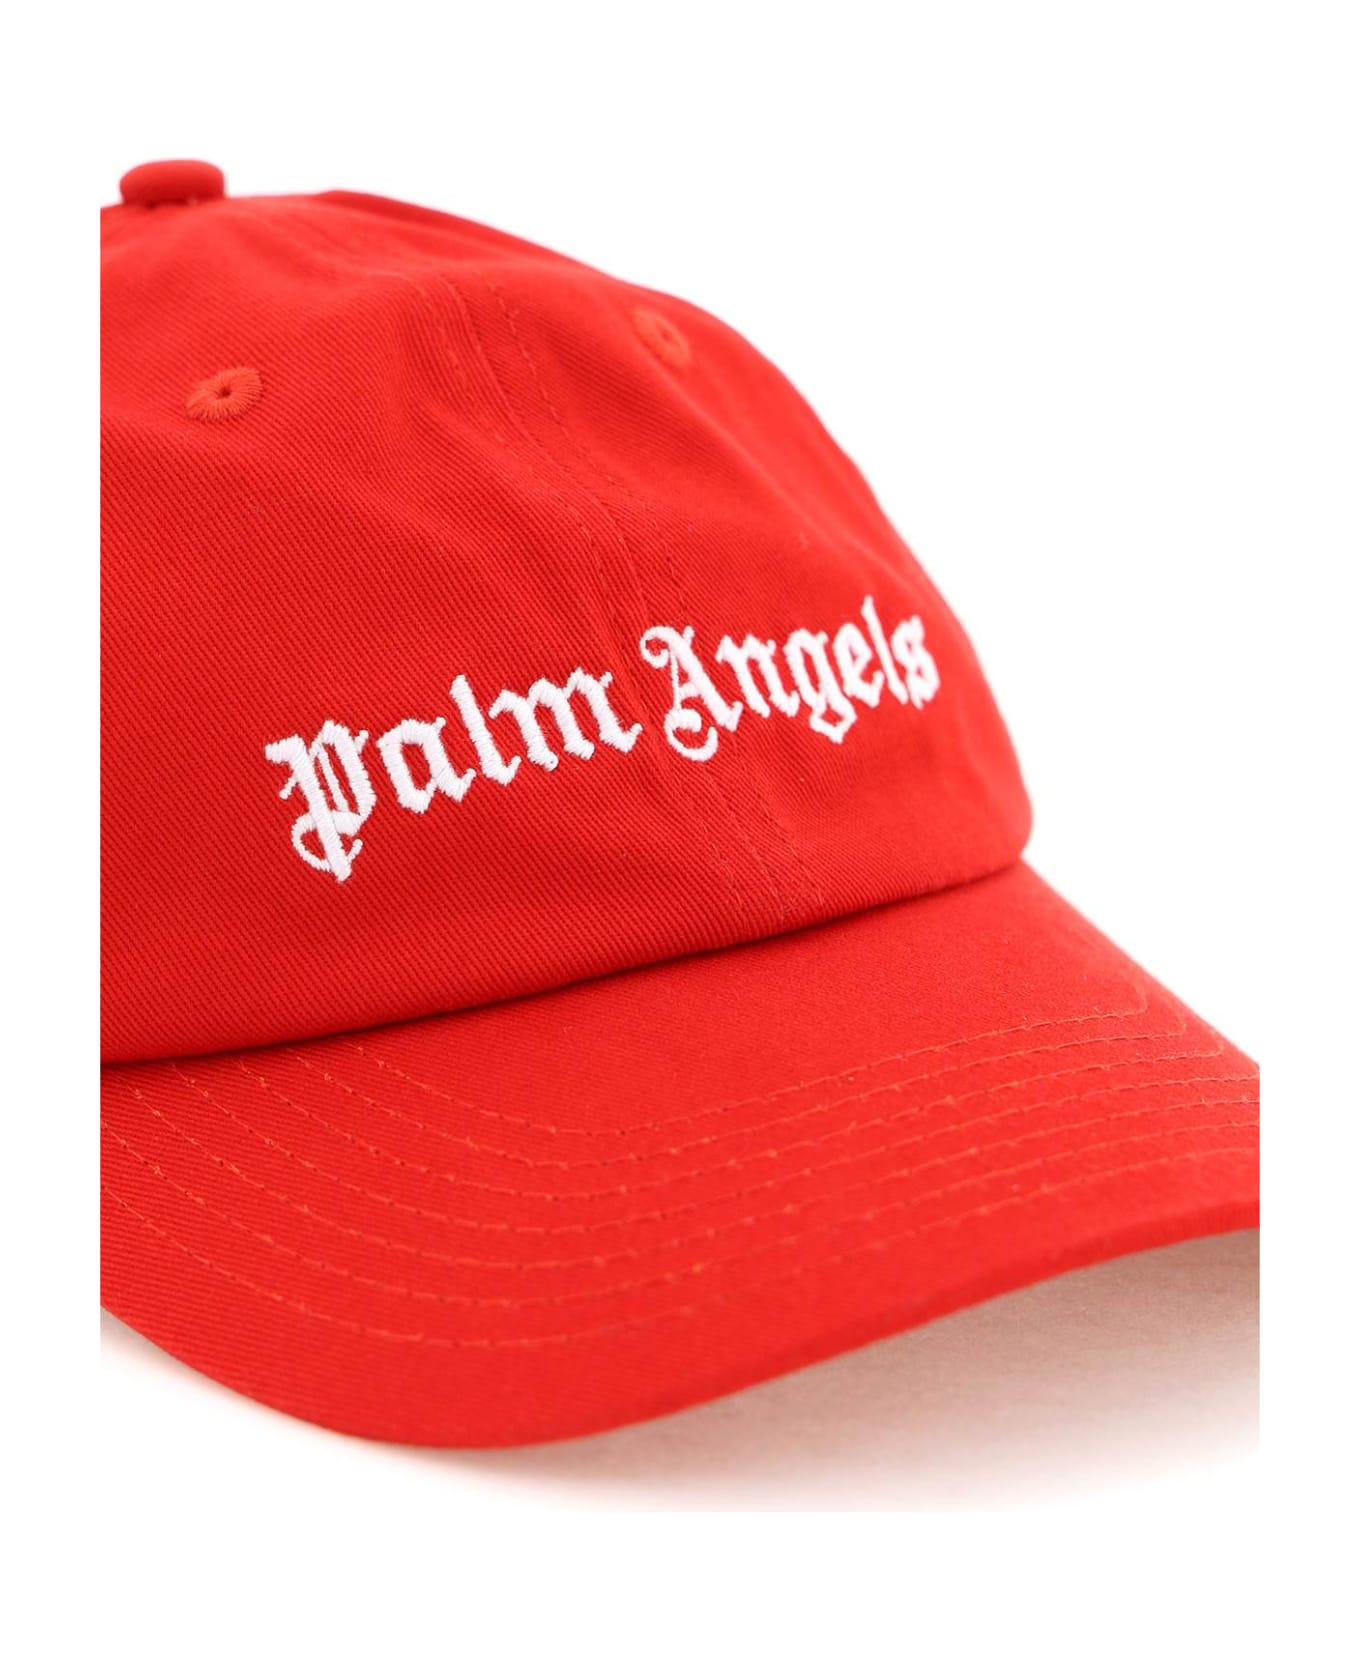 Palm Angels Logo Baseball Cap - Red 帽子